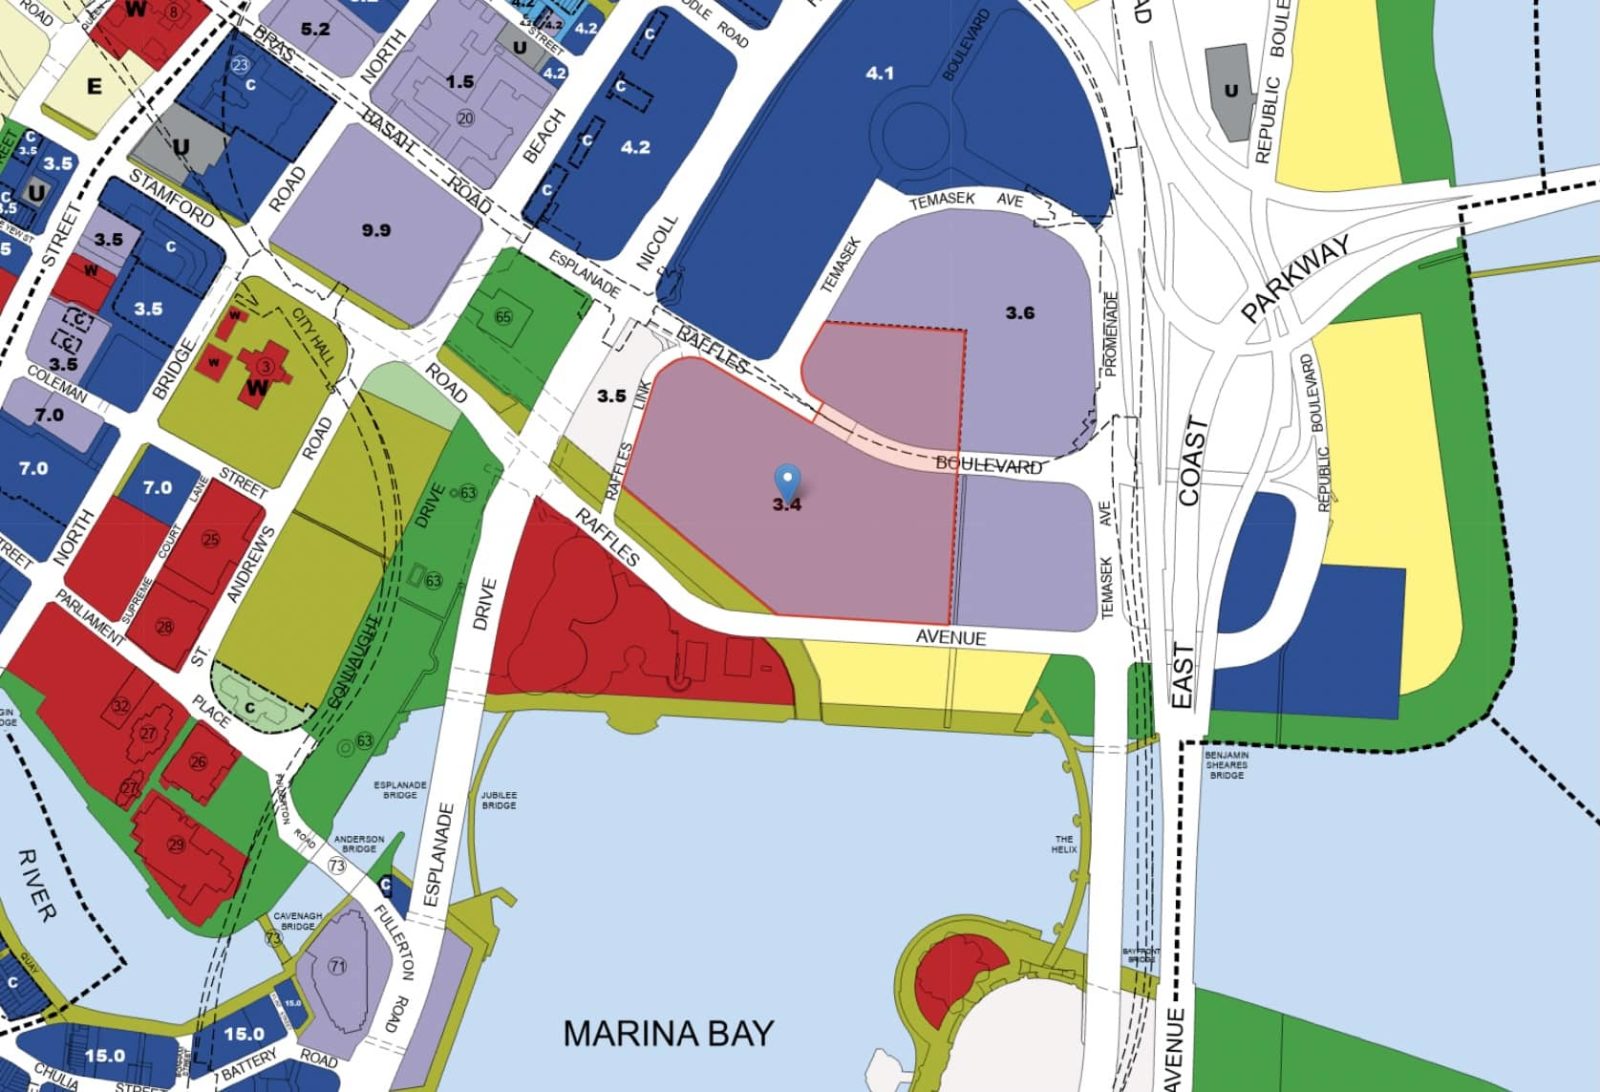 marina square master plan